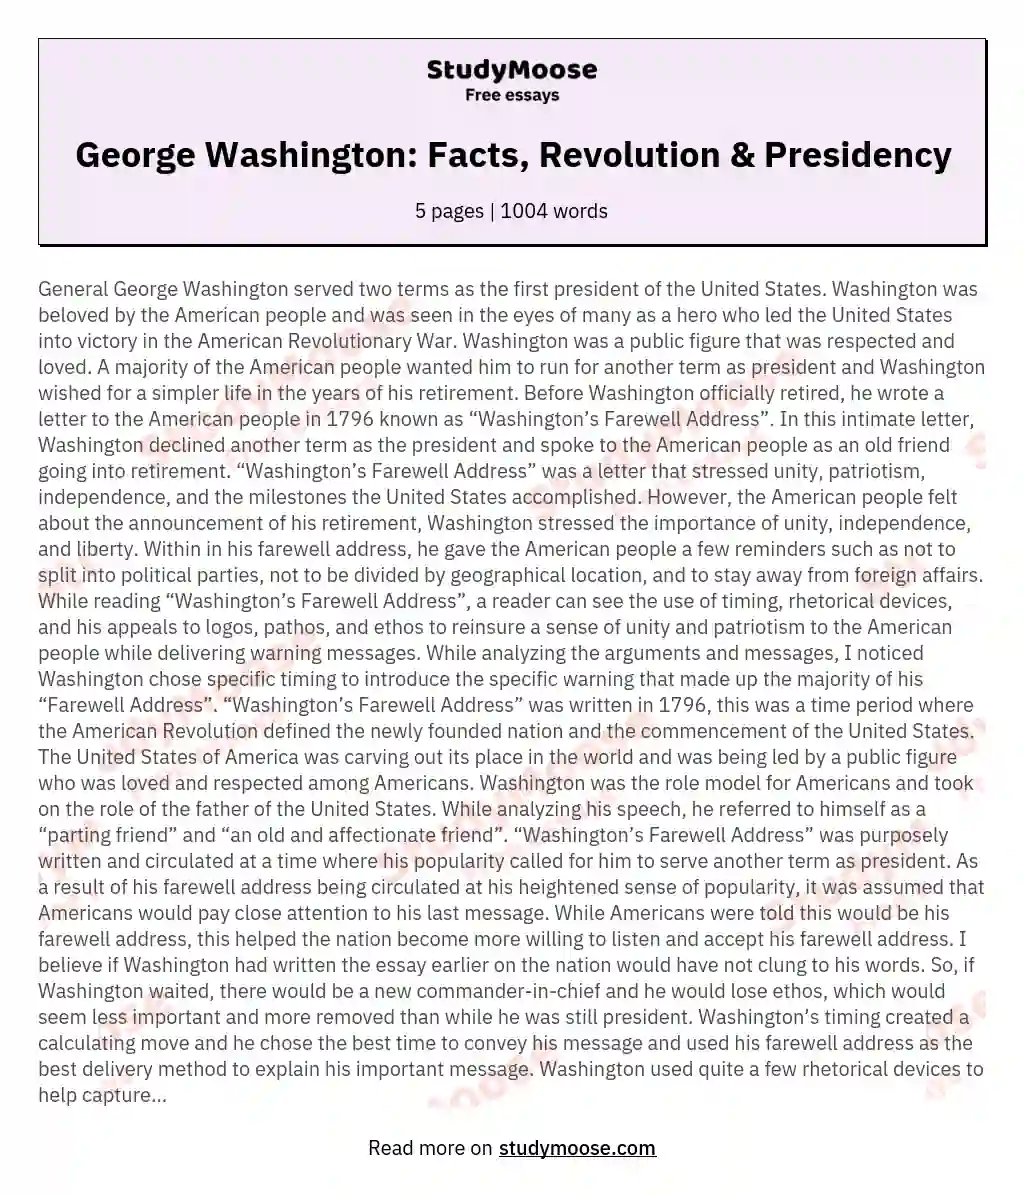 George Washington: Facts, Revolution & Presidency